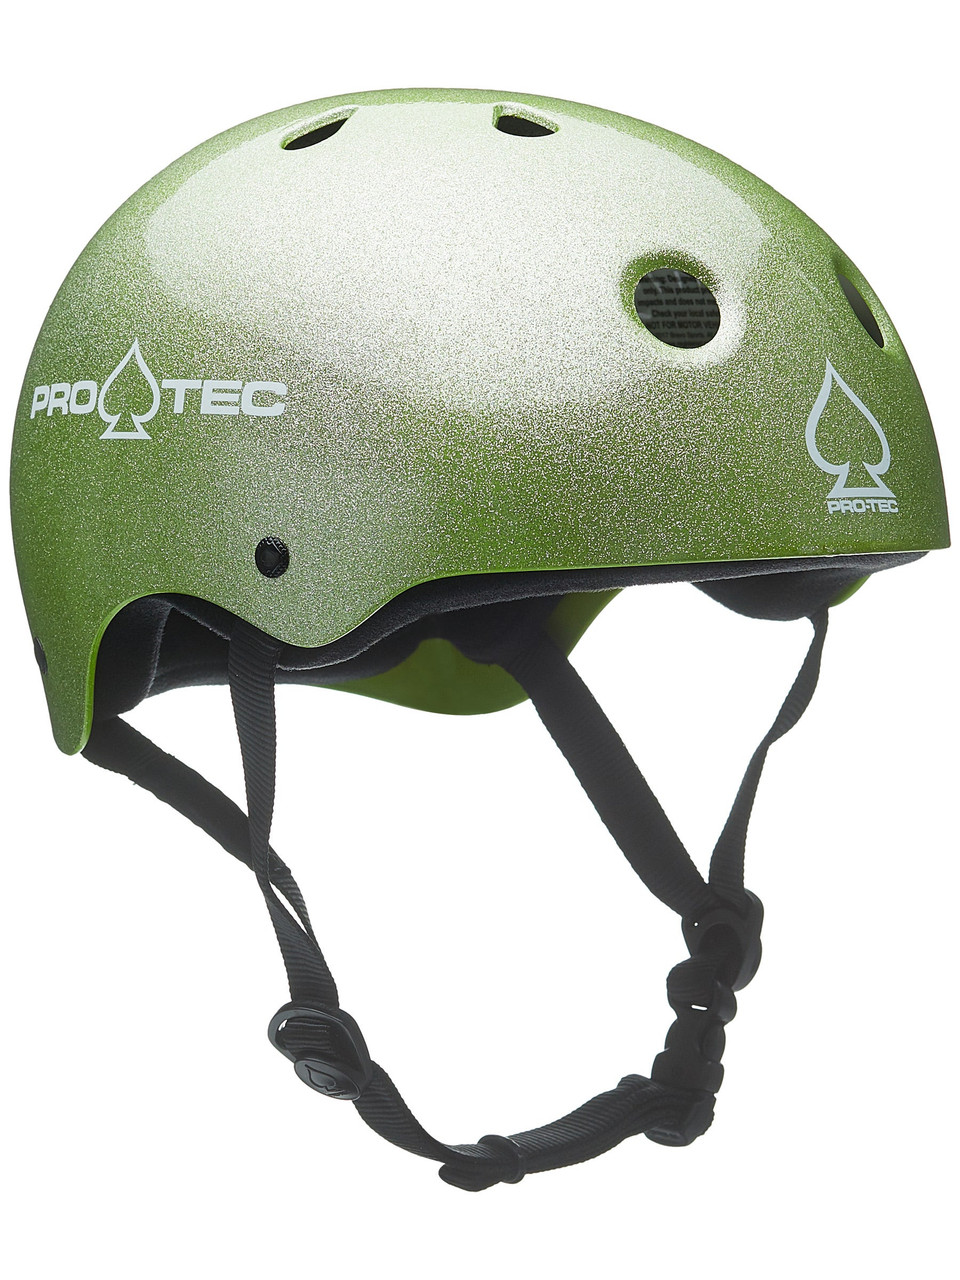 Protec Classic Skate Helmet Green Flake S